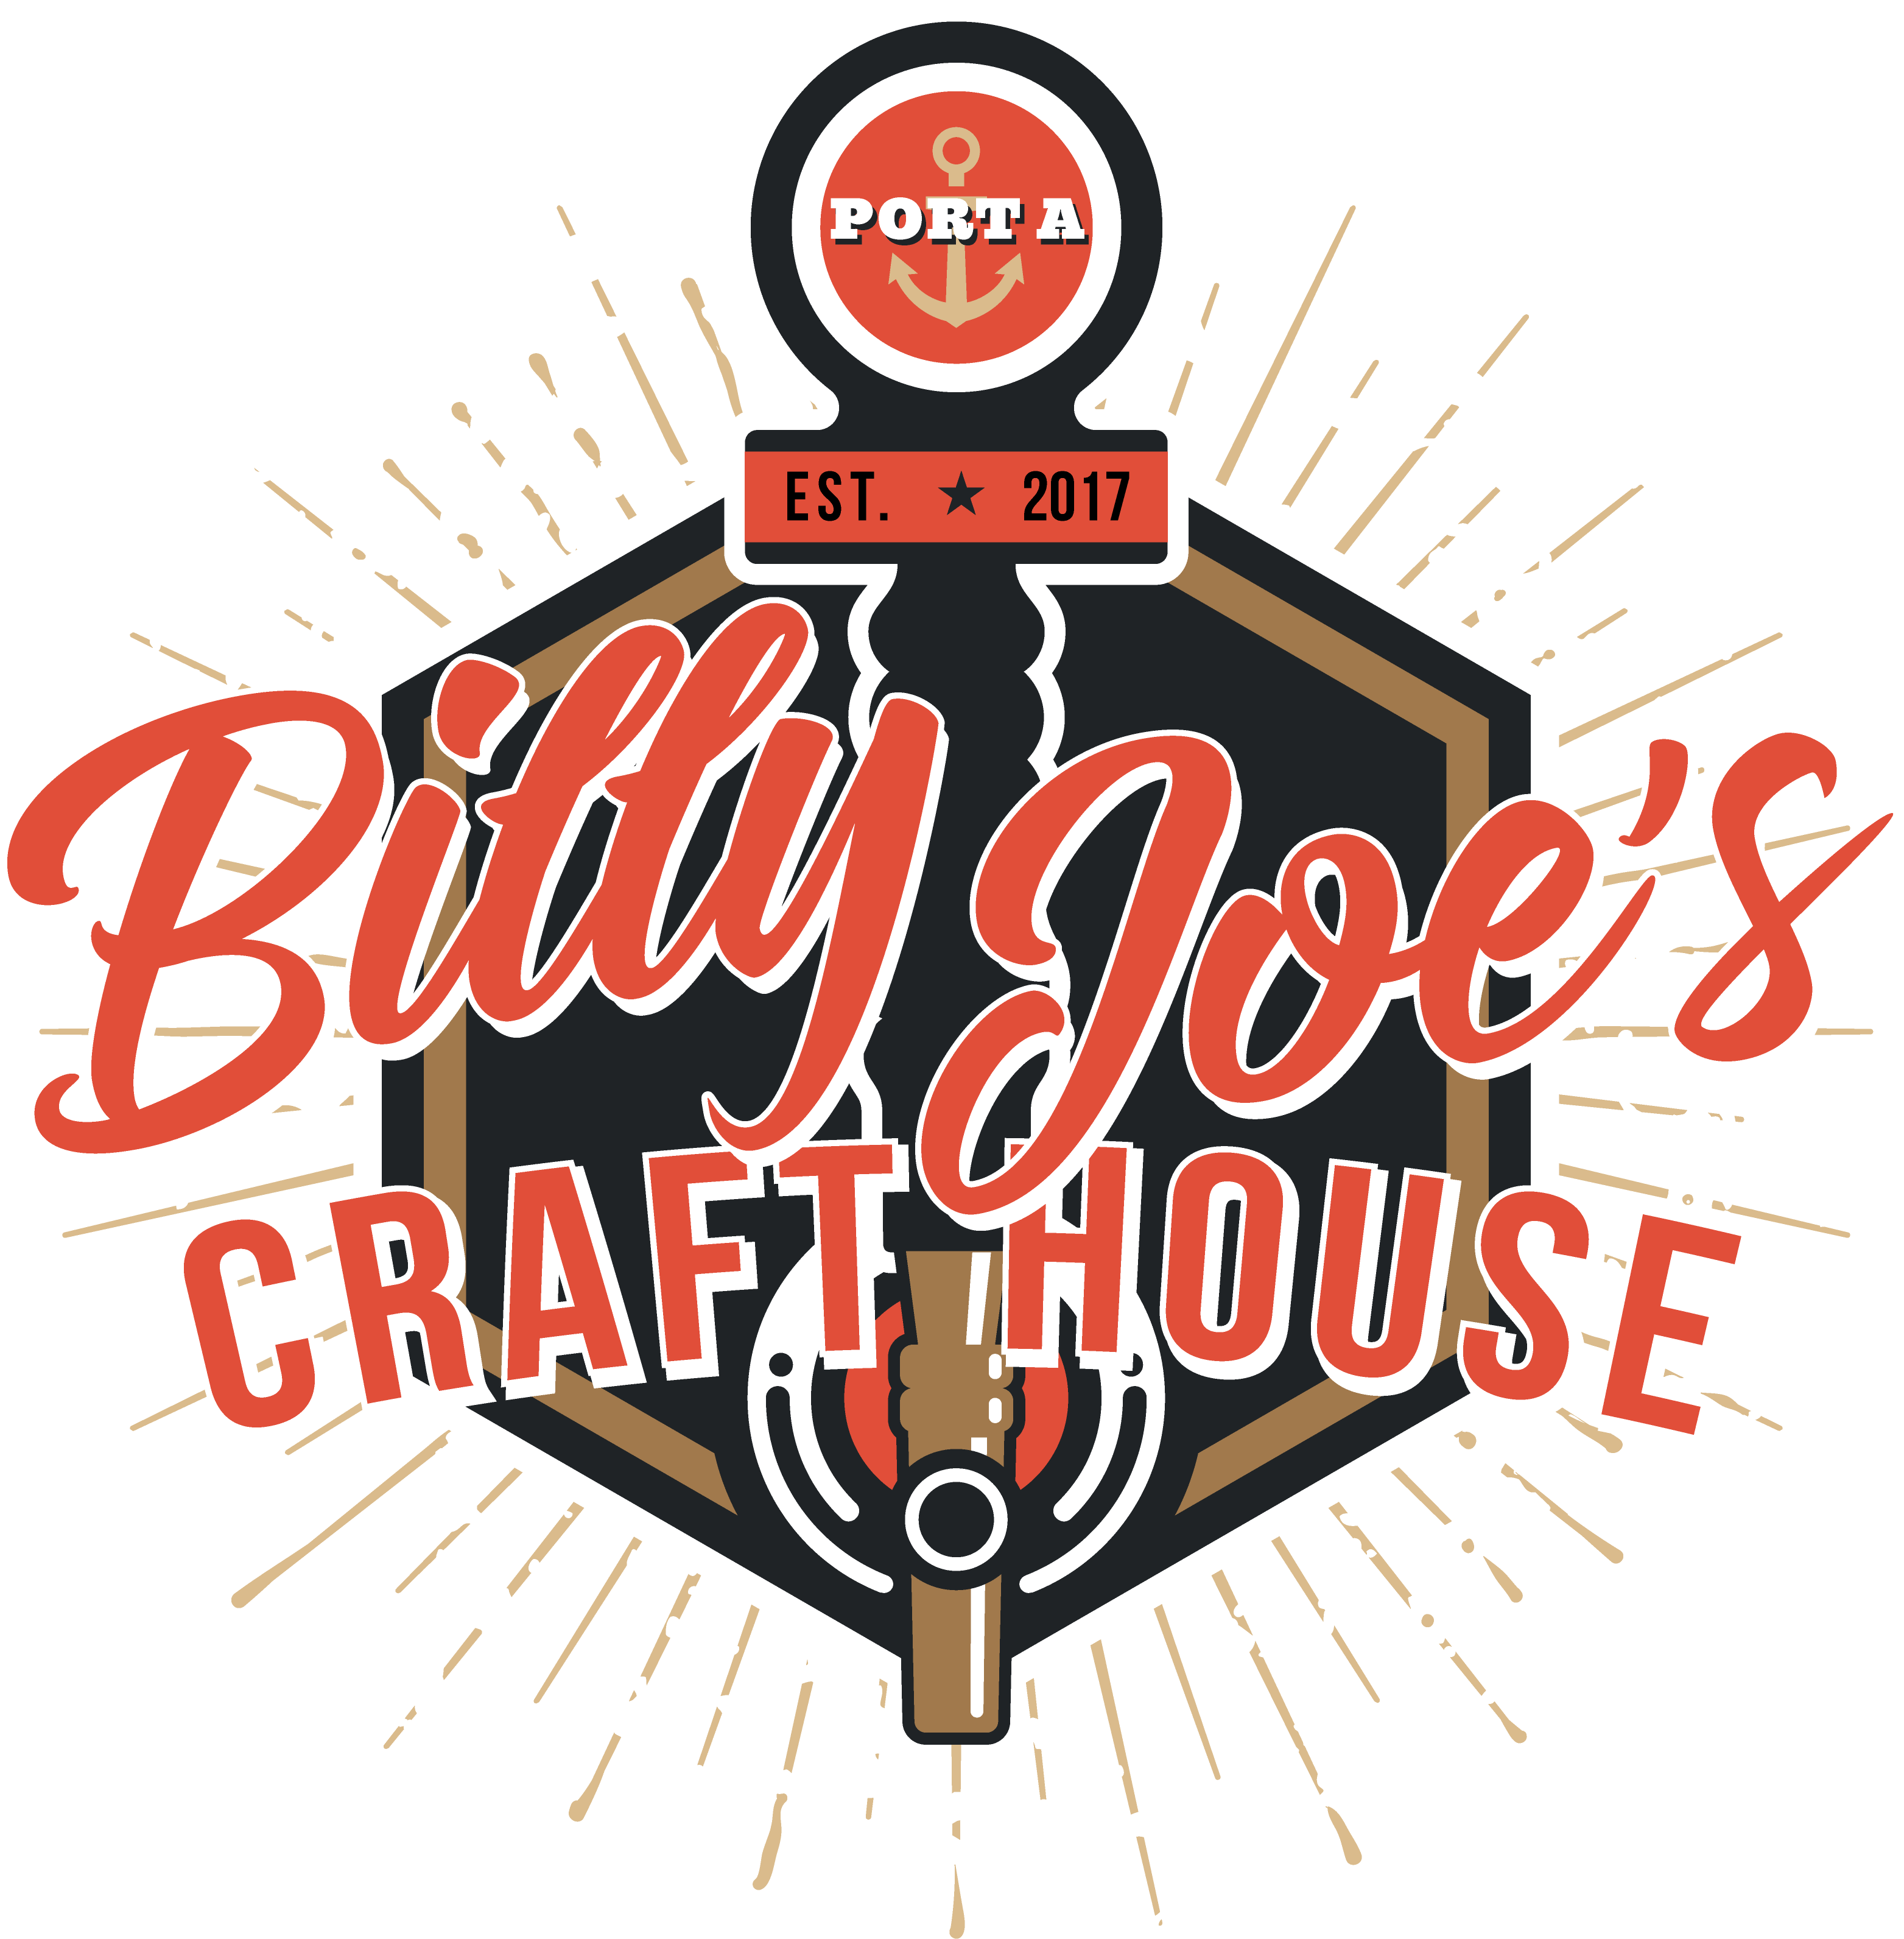 Billy Joe's Craft House Logo - Billy Joe's Craft House (3334x3334)